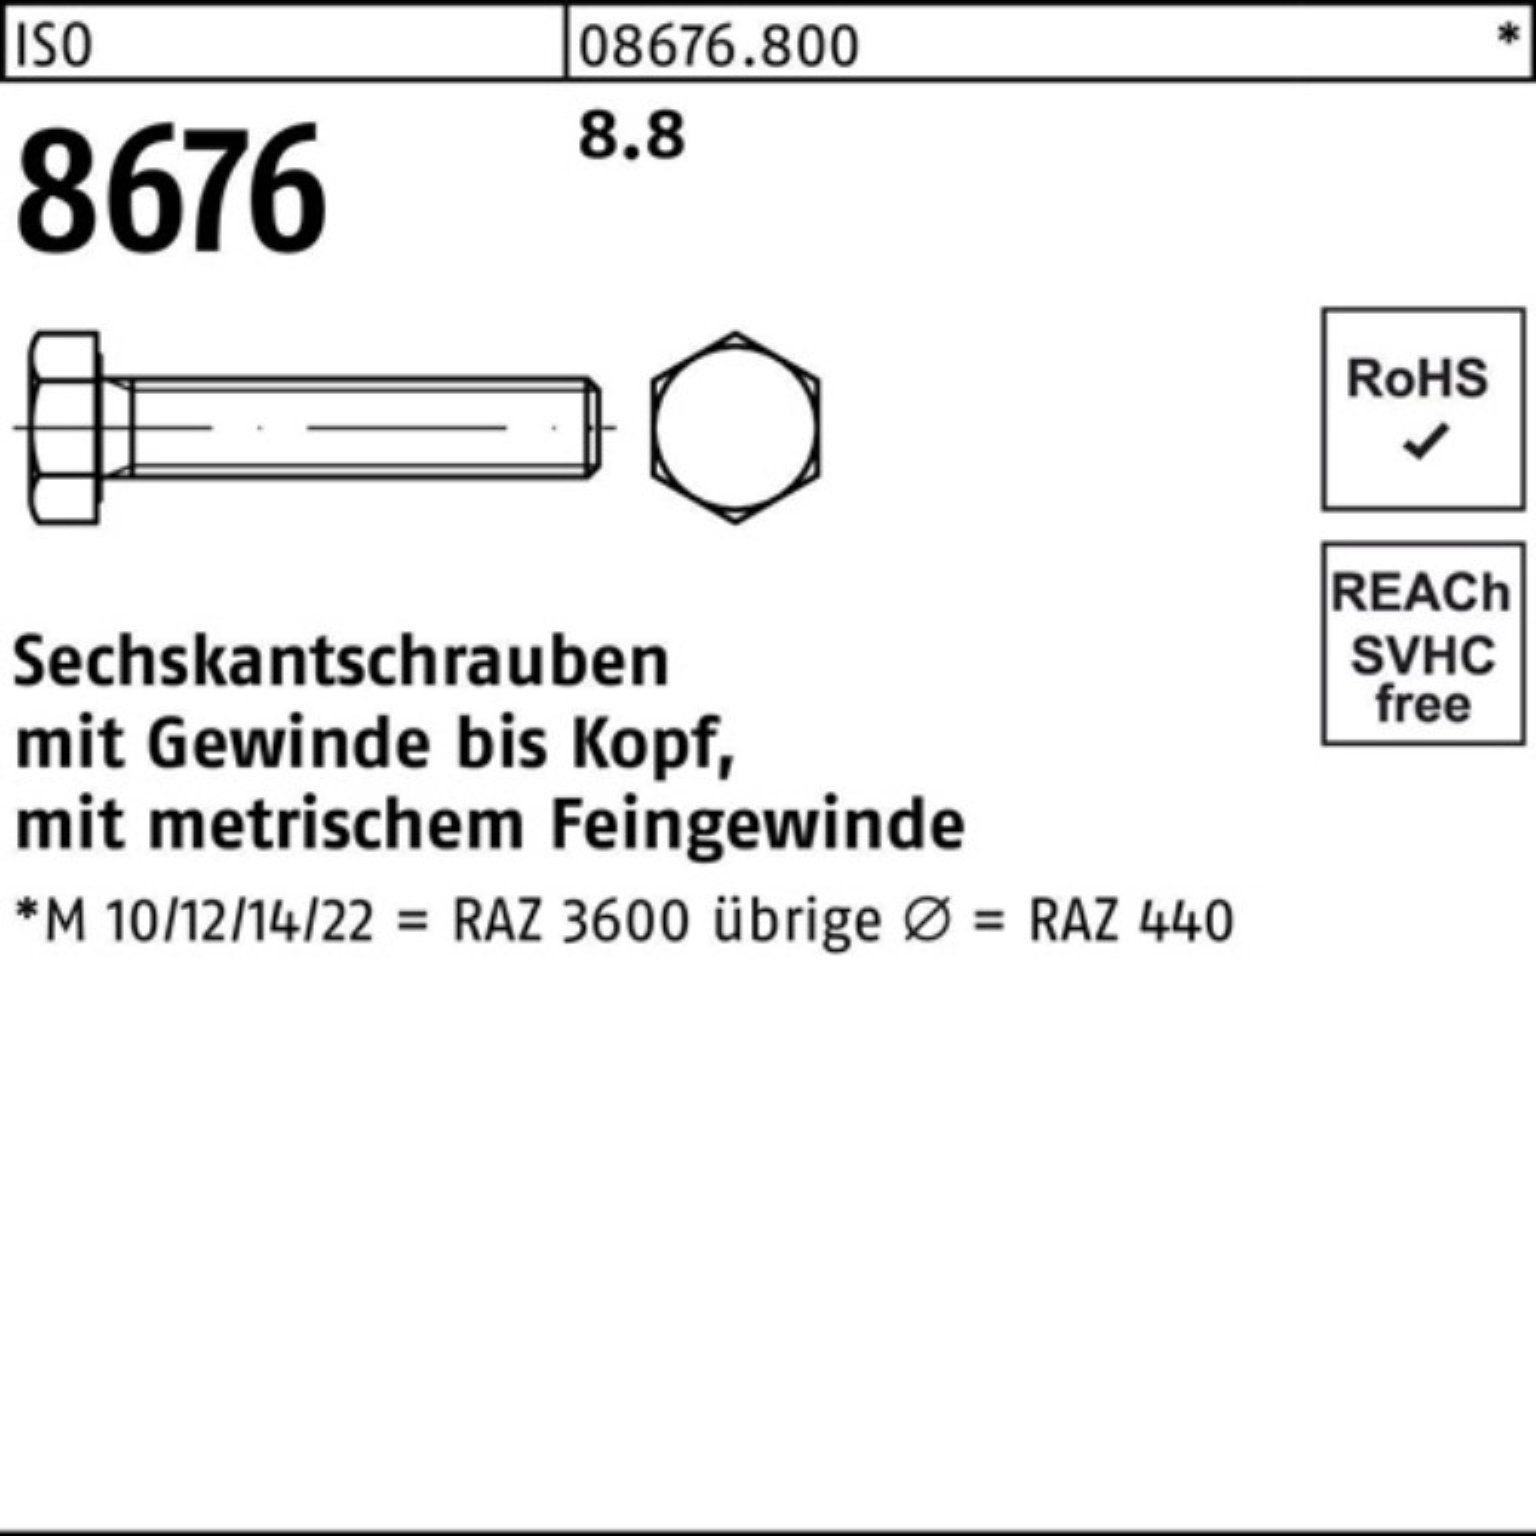 Reyher Sechskantschraube 100er M20x1,5x 30 Pack Sechskantschraube 8676 Stück VG 25 ISO 8.8 ISO